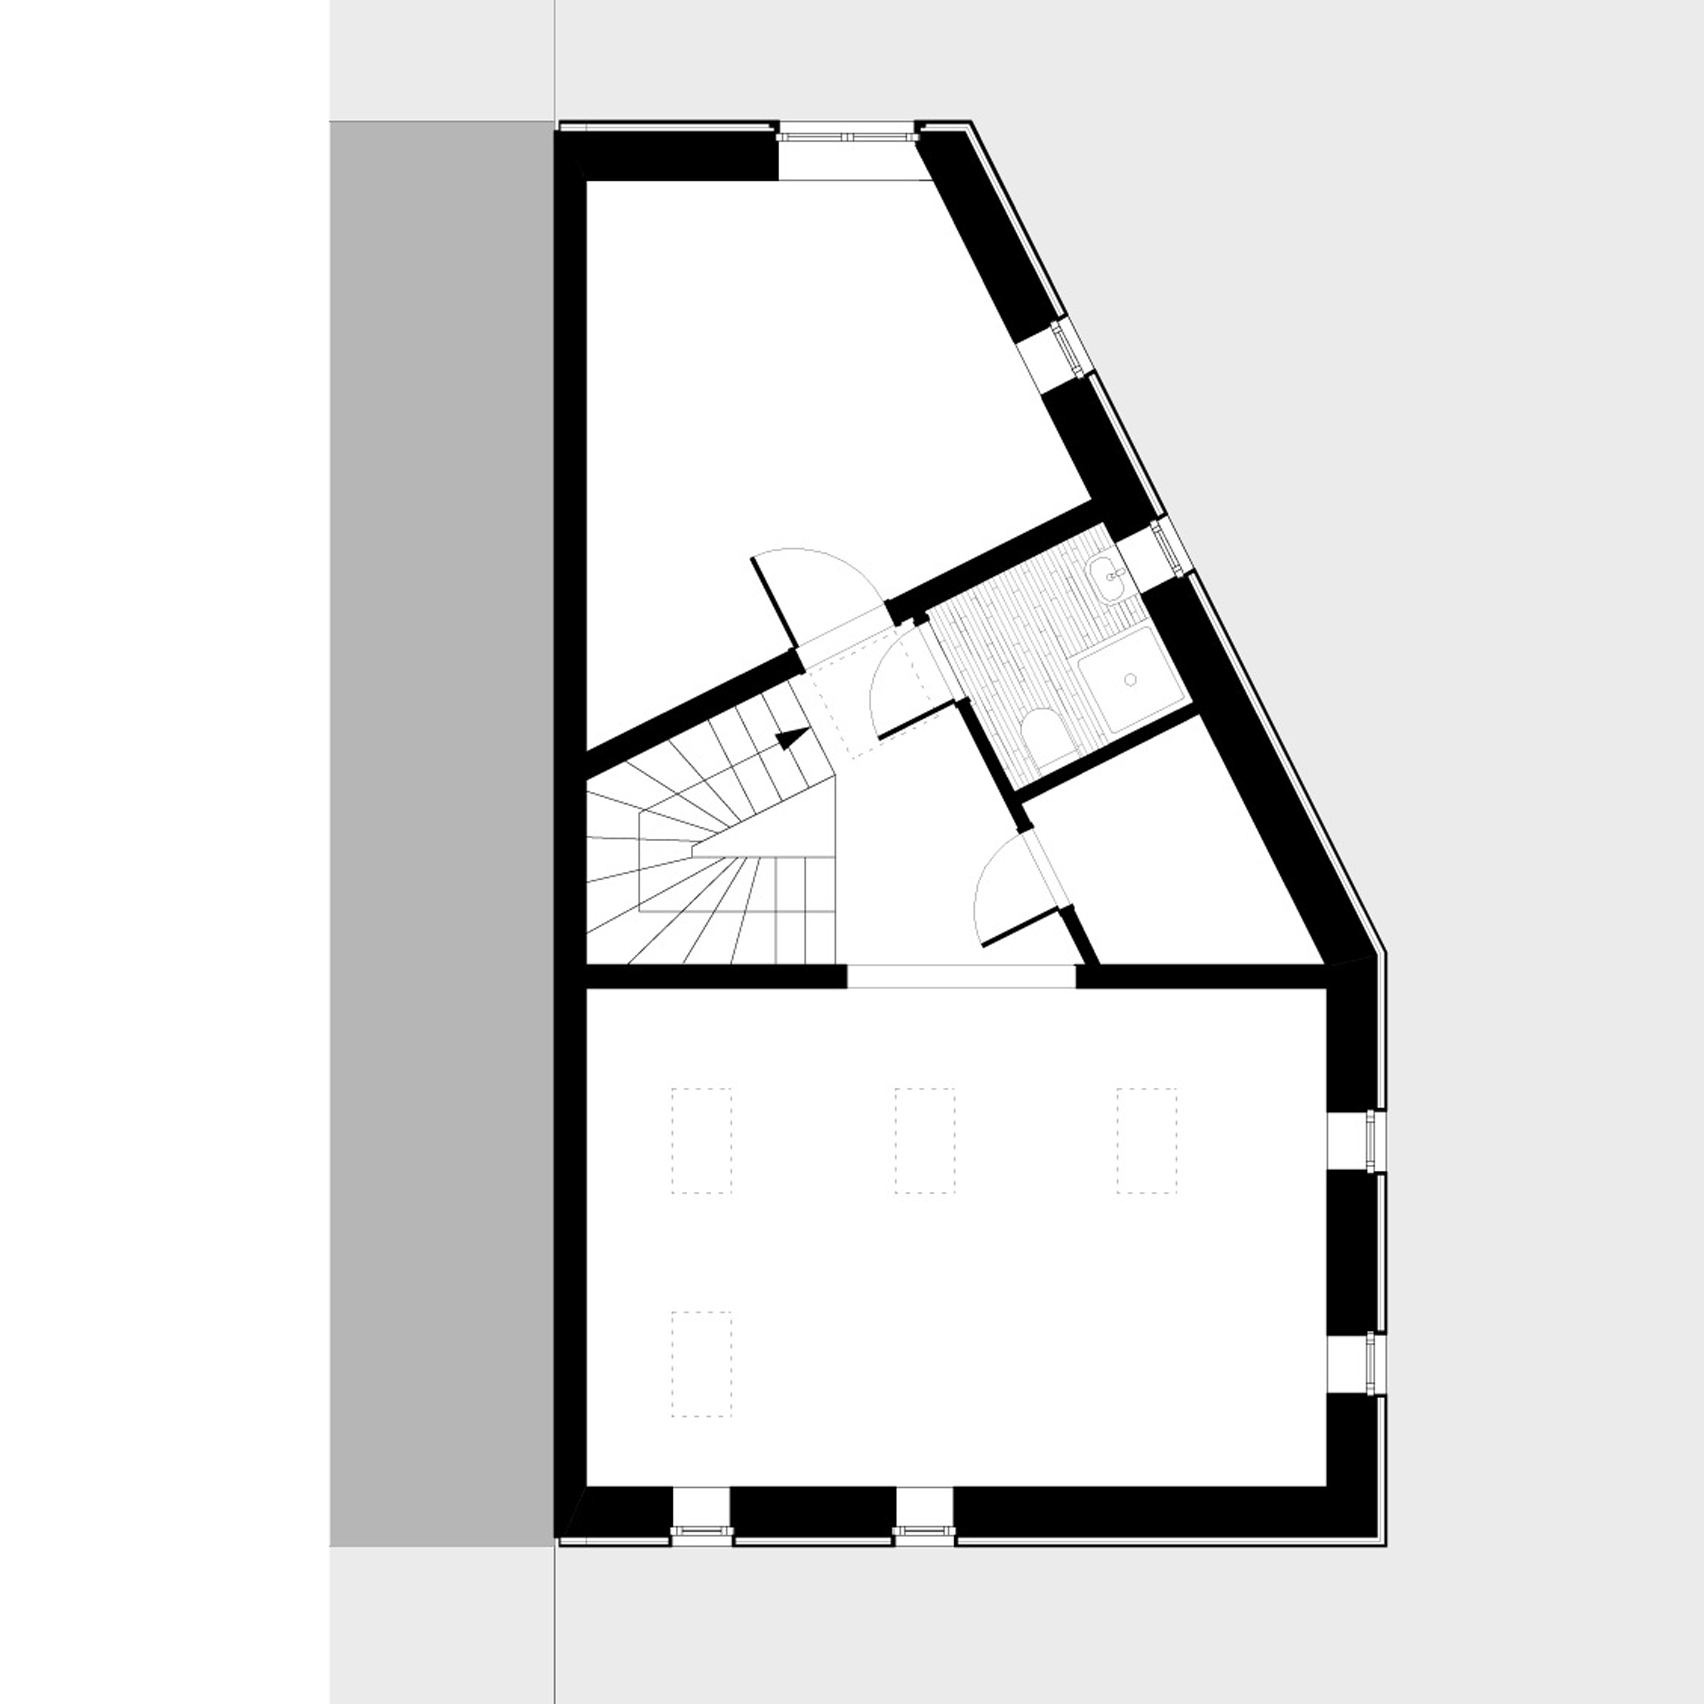 schuppen-family-house-brandt-simon-architekten-berlin-germany-coloured-tile-facade_dezeen_second-floor--plan